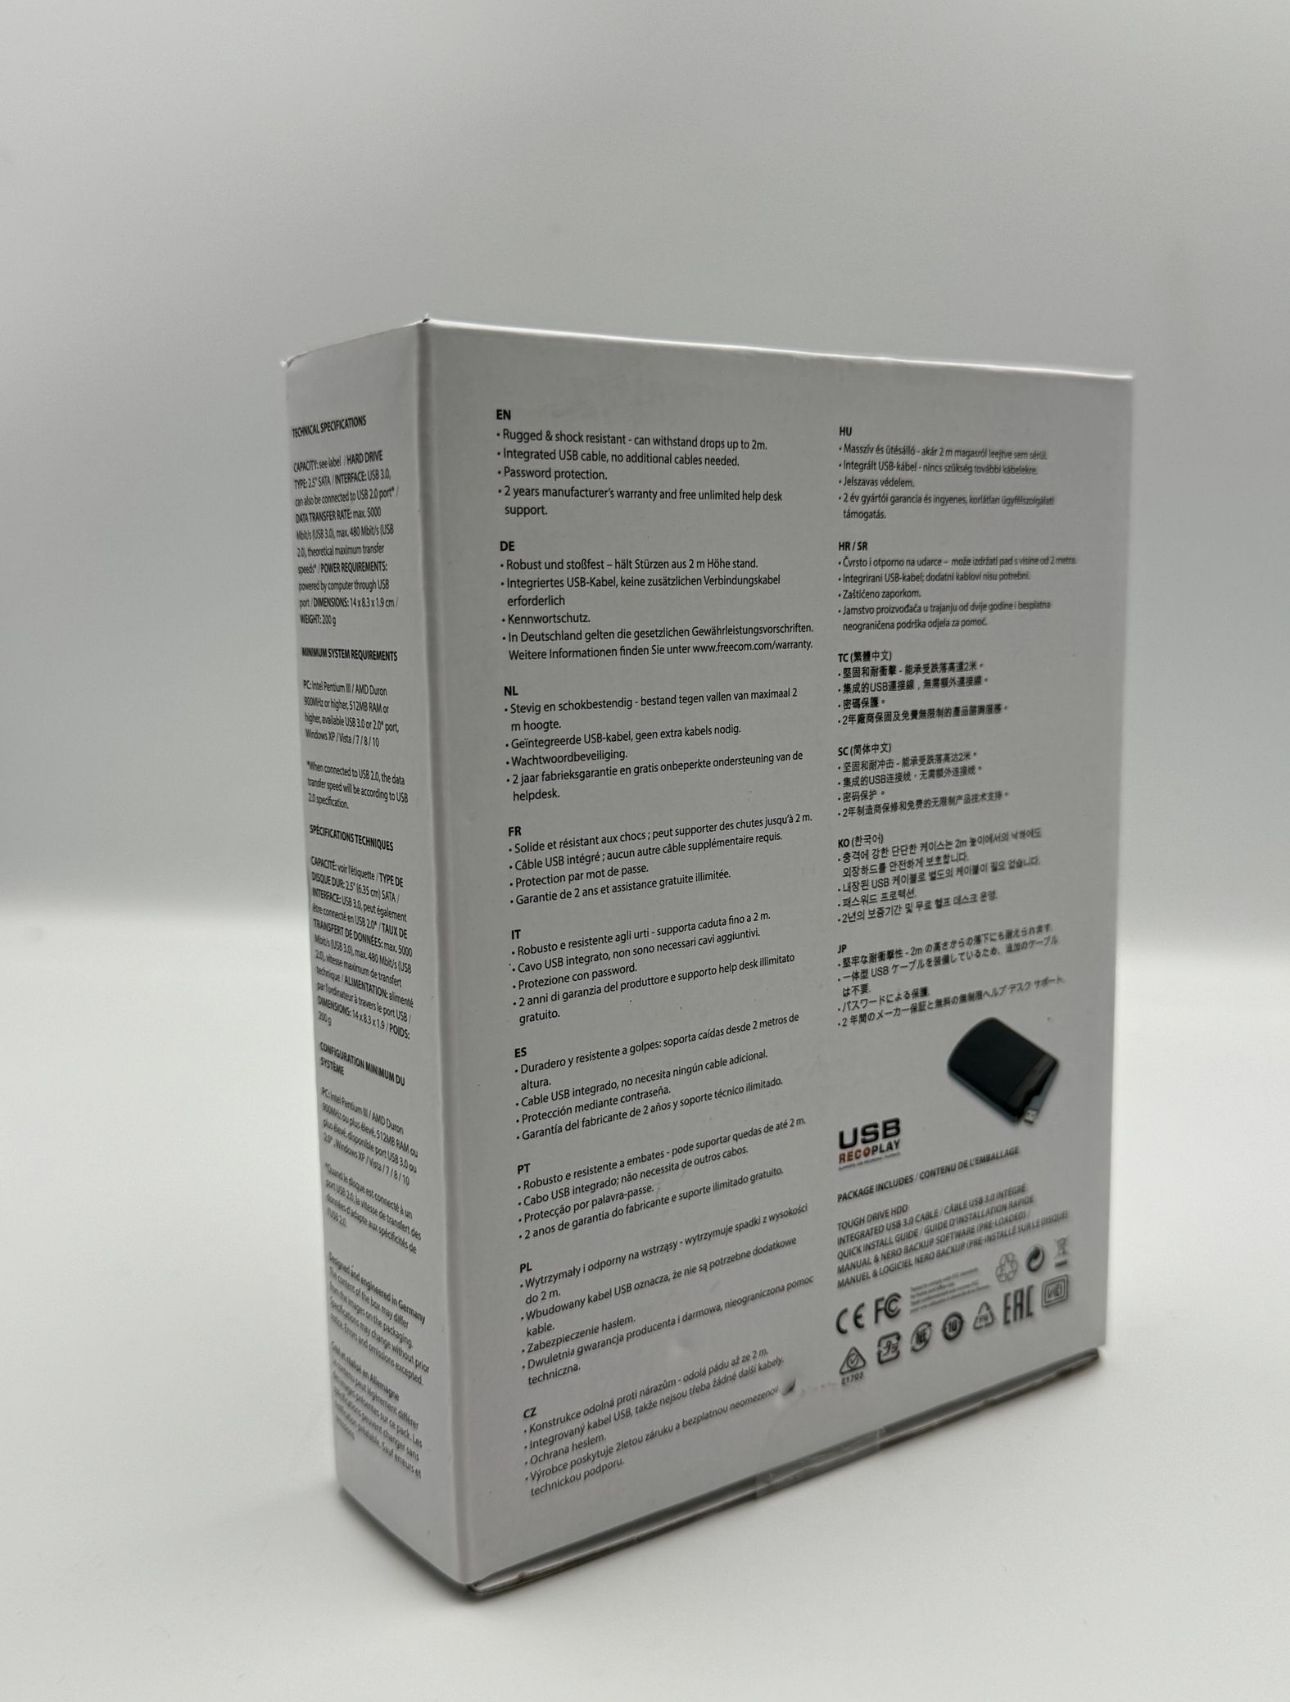 HDD extern Freecom ToughDrive, 2.5", 2TB, USB 3.0, Anti-shock